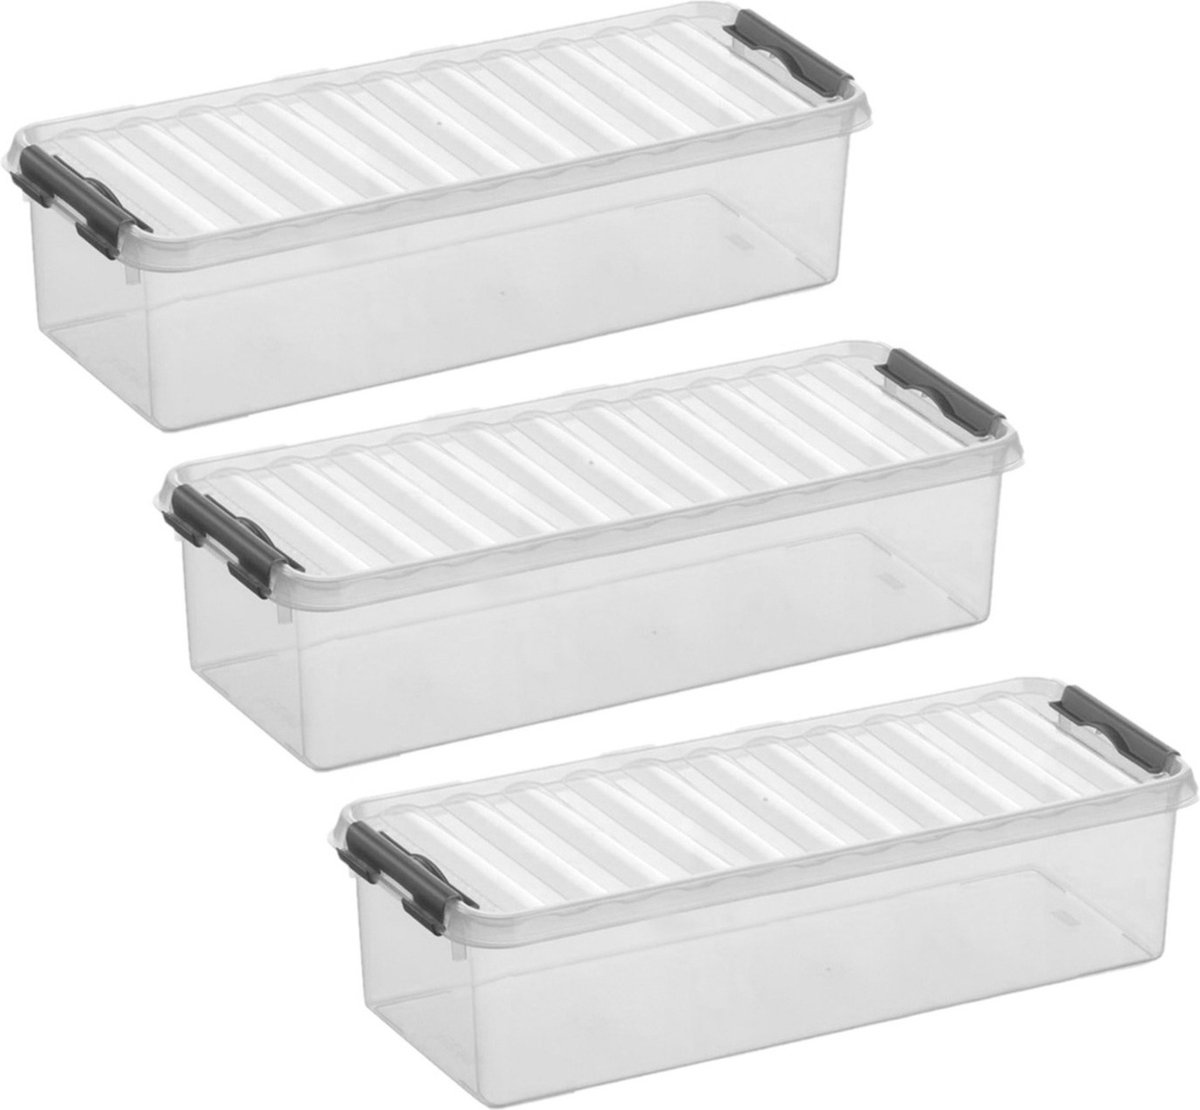 5x stuks opberg box/opbergdoos 3.5 liter 38.5 x 14 x 9.2 cm - Opslagbox - Opbergbak kunststof transparant/grijs